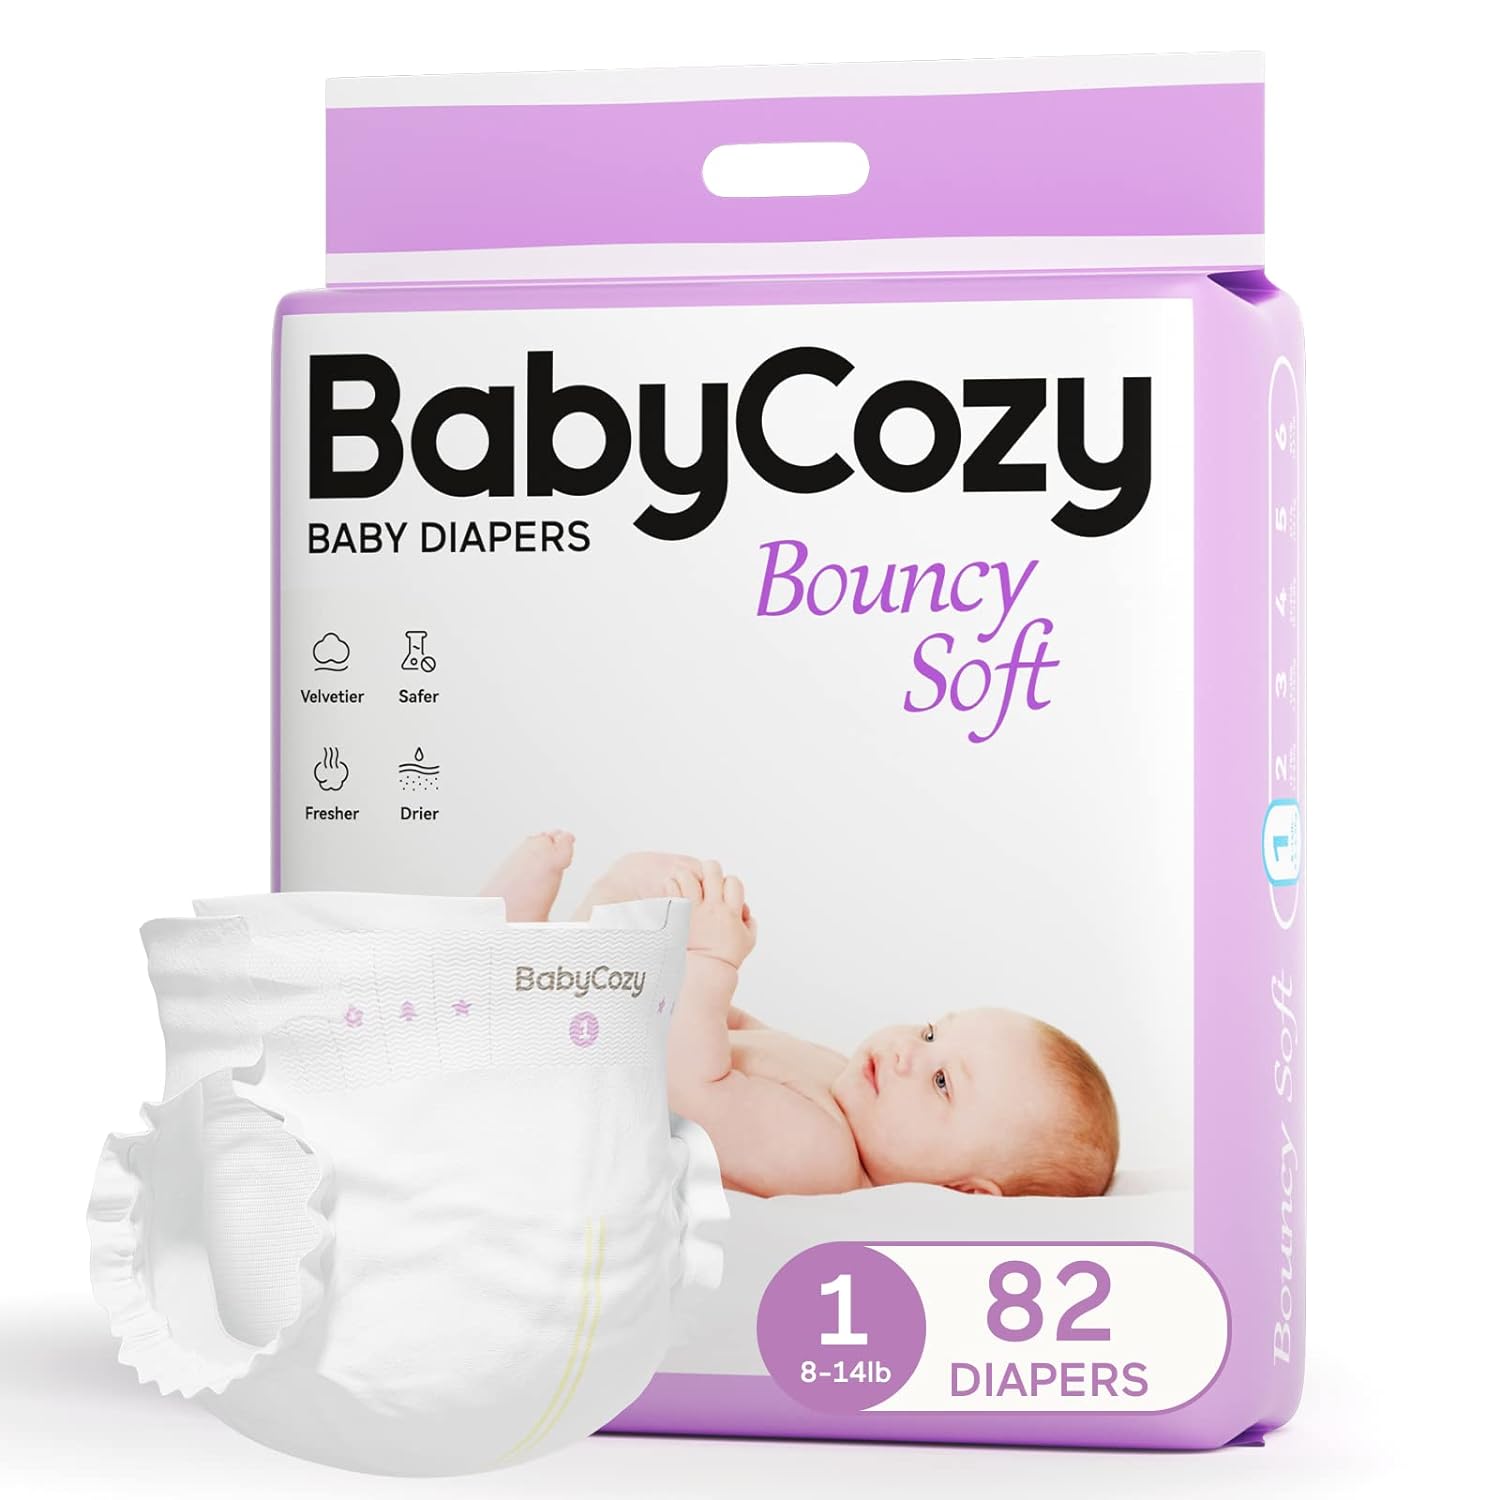 Babycozy BouncySoft Newborn Diapers for Sensitive Skin